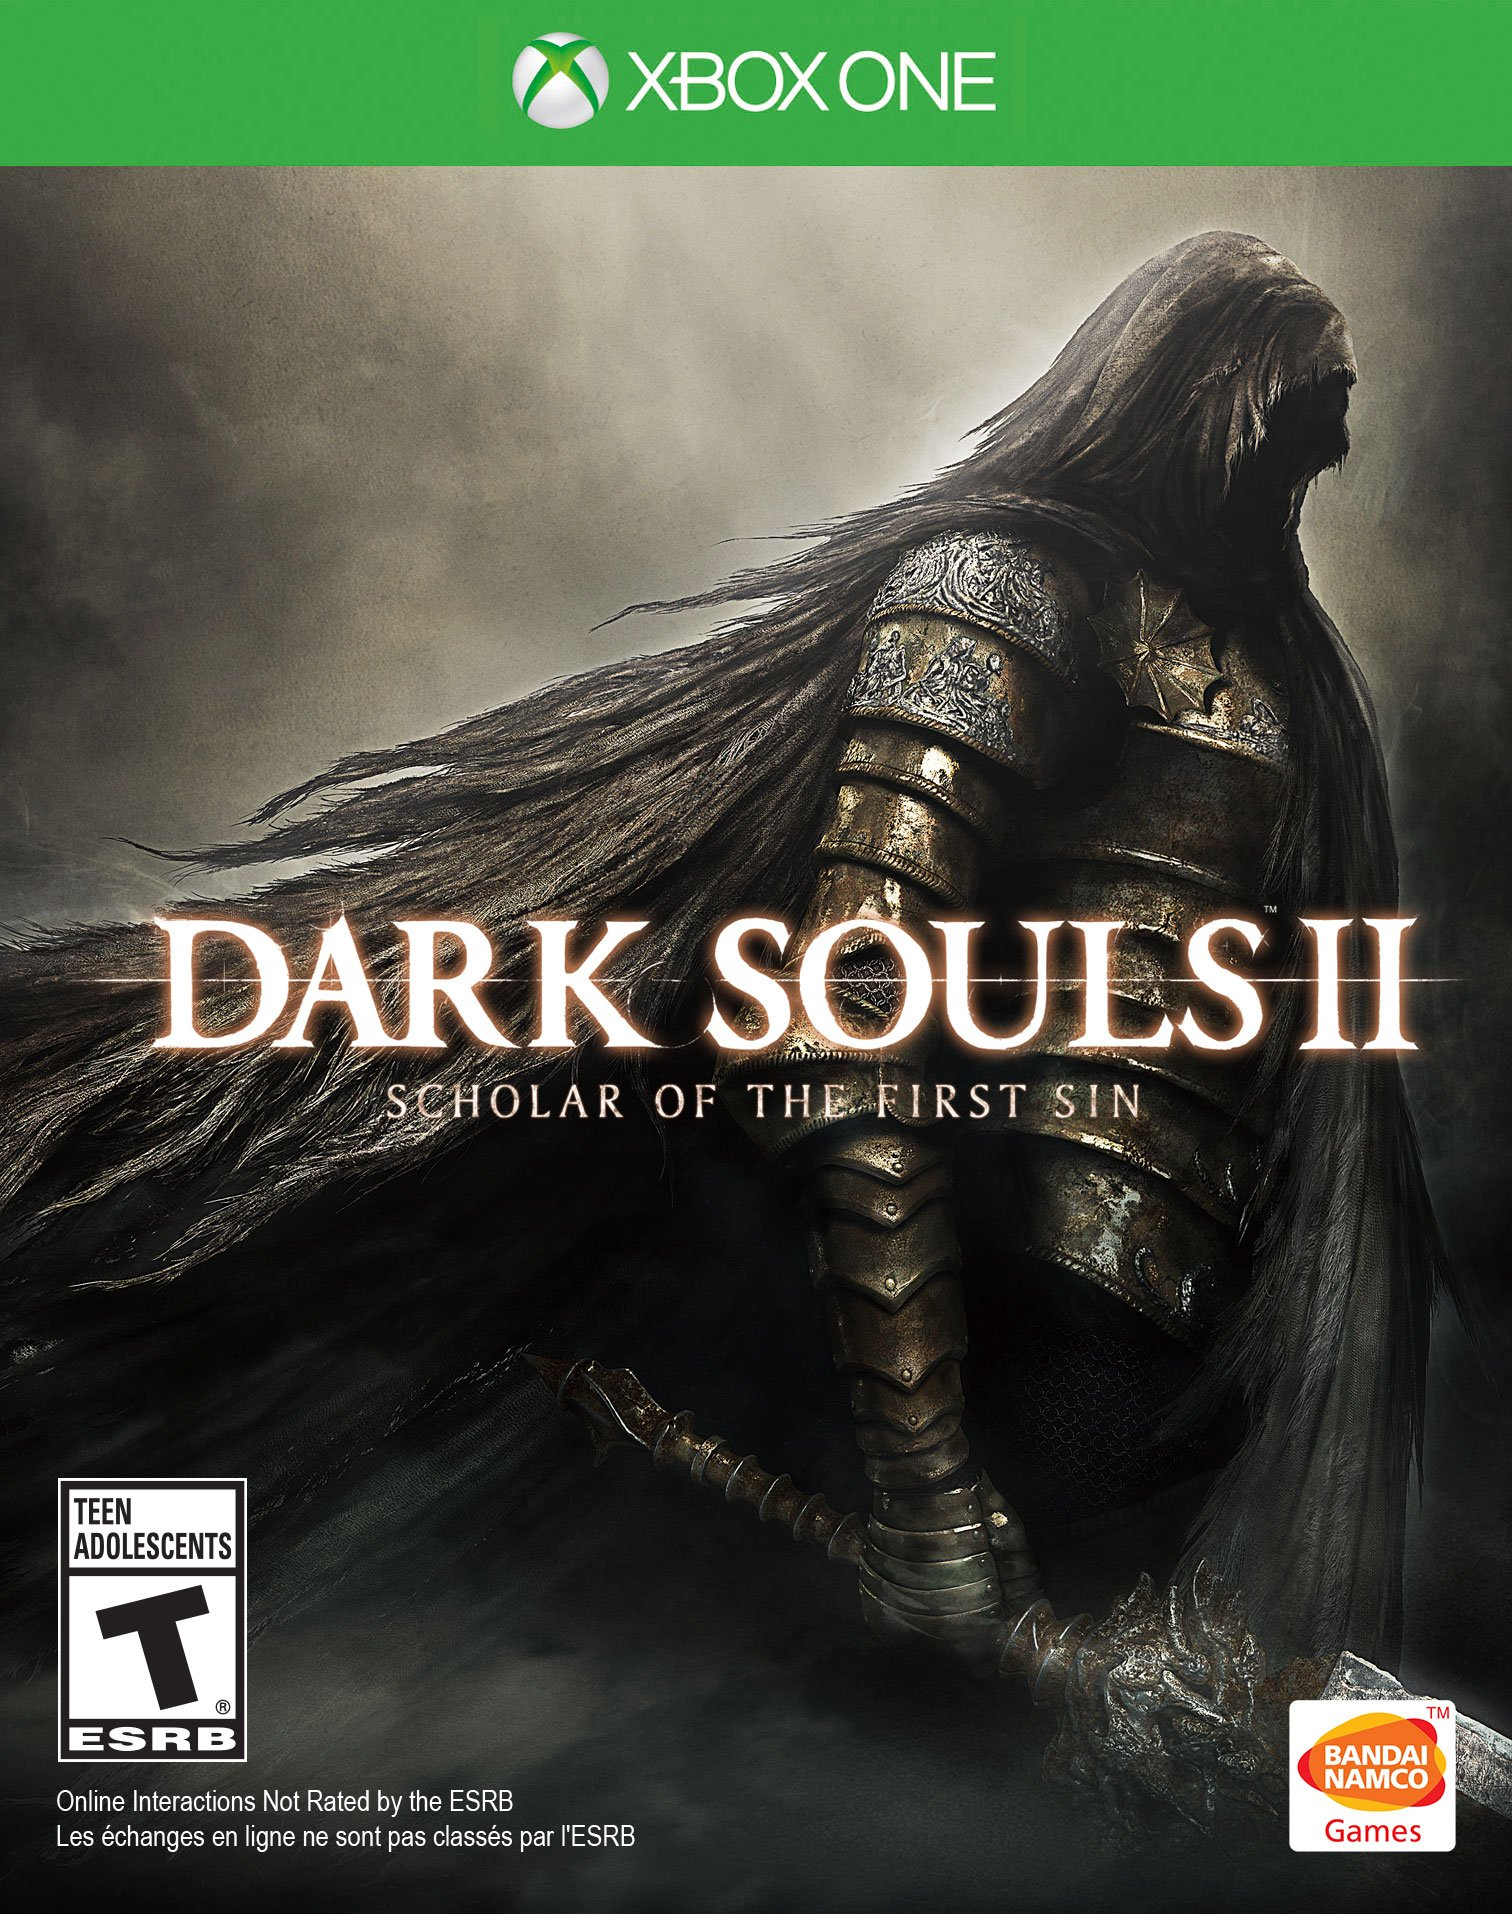 Игра DARK SOULS II: Scholar of the First Sin, цифровой ключ для Xbox One/Series X|S, Русский язык, Аргентина